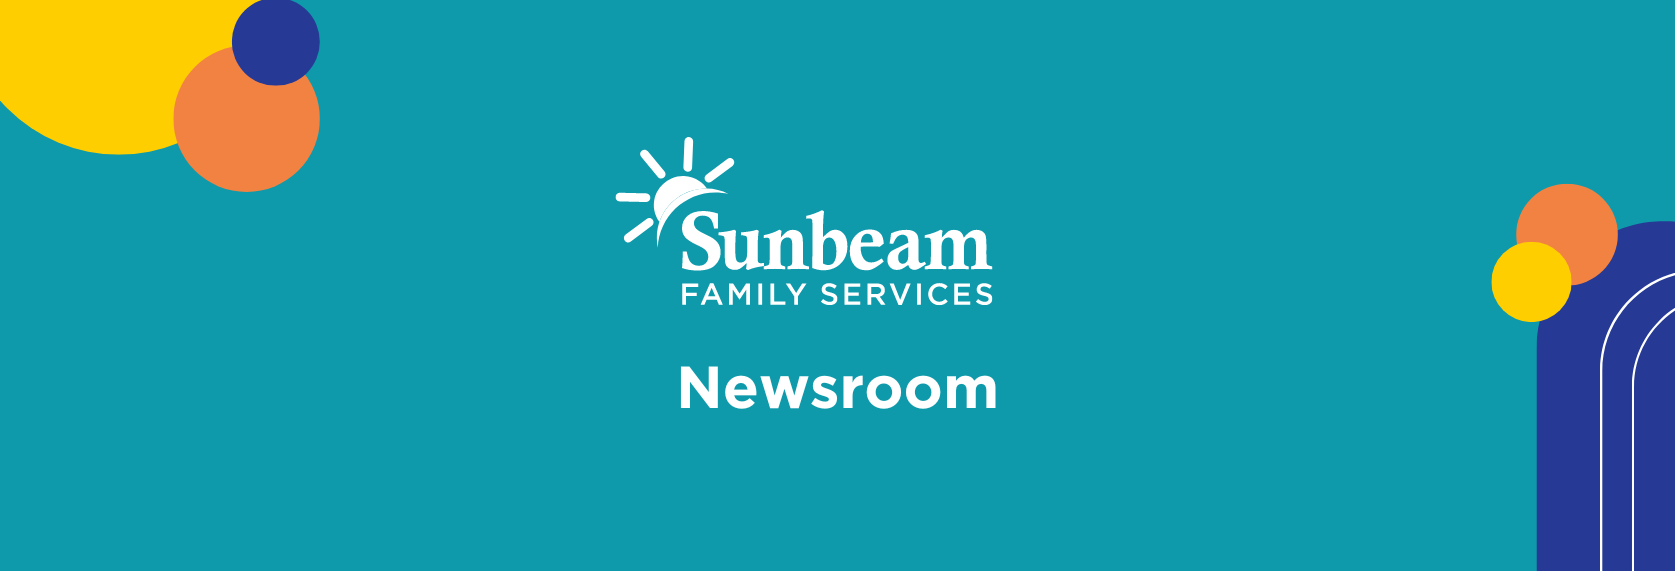 SunBeam Logo Design by Emmanuel Chiefe on Dribbble